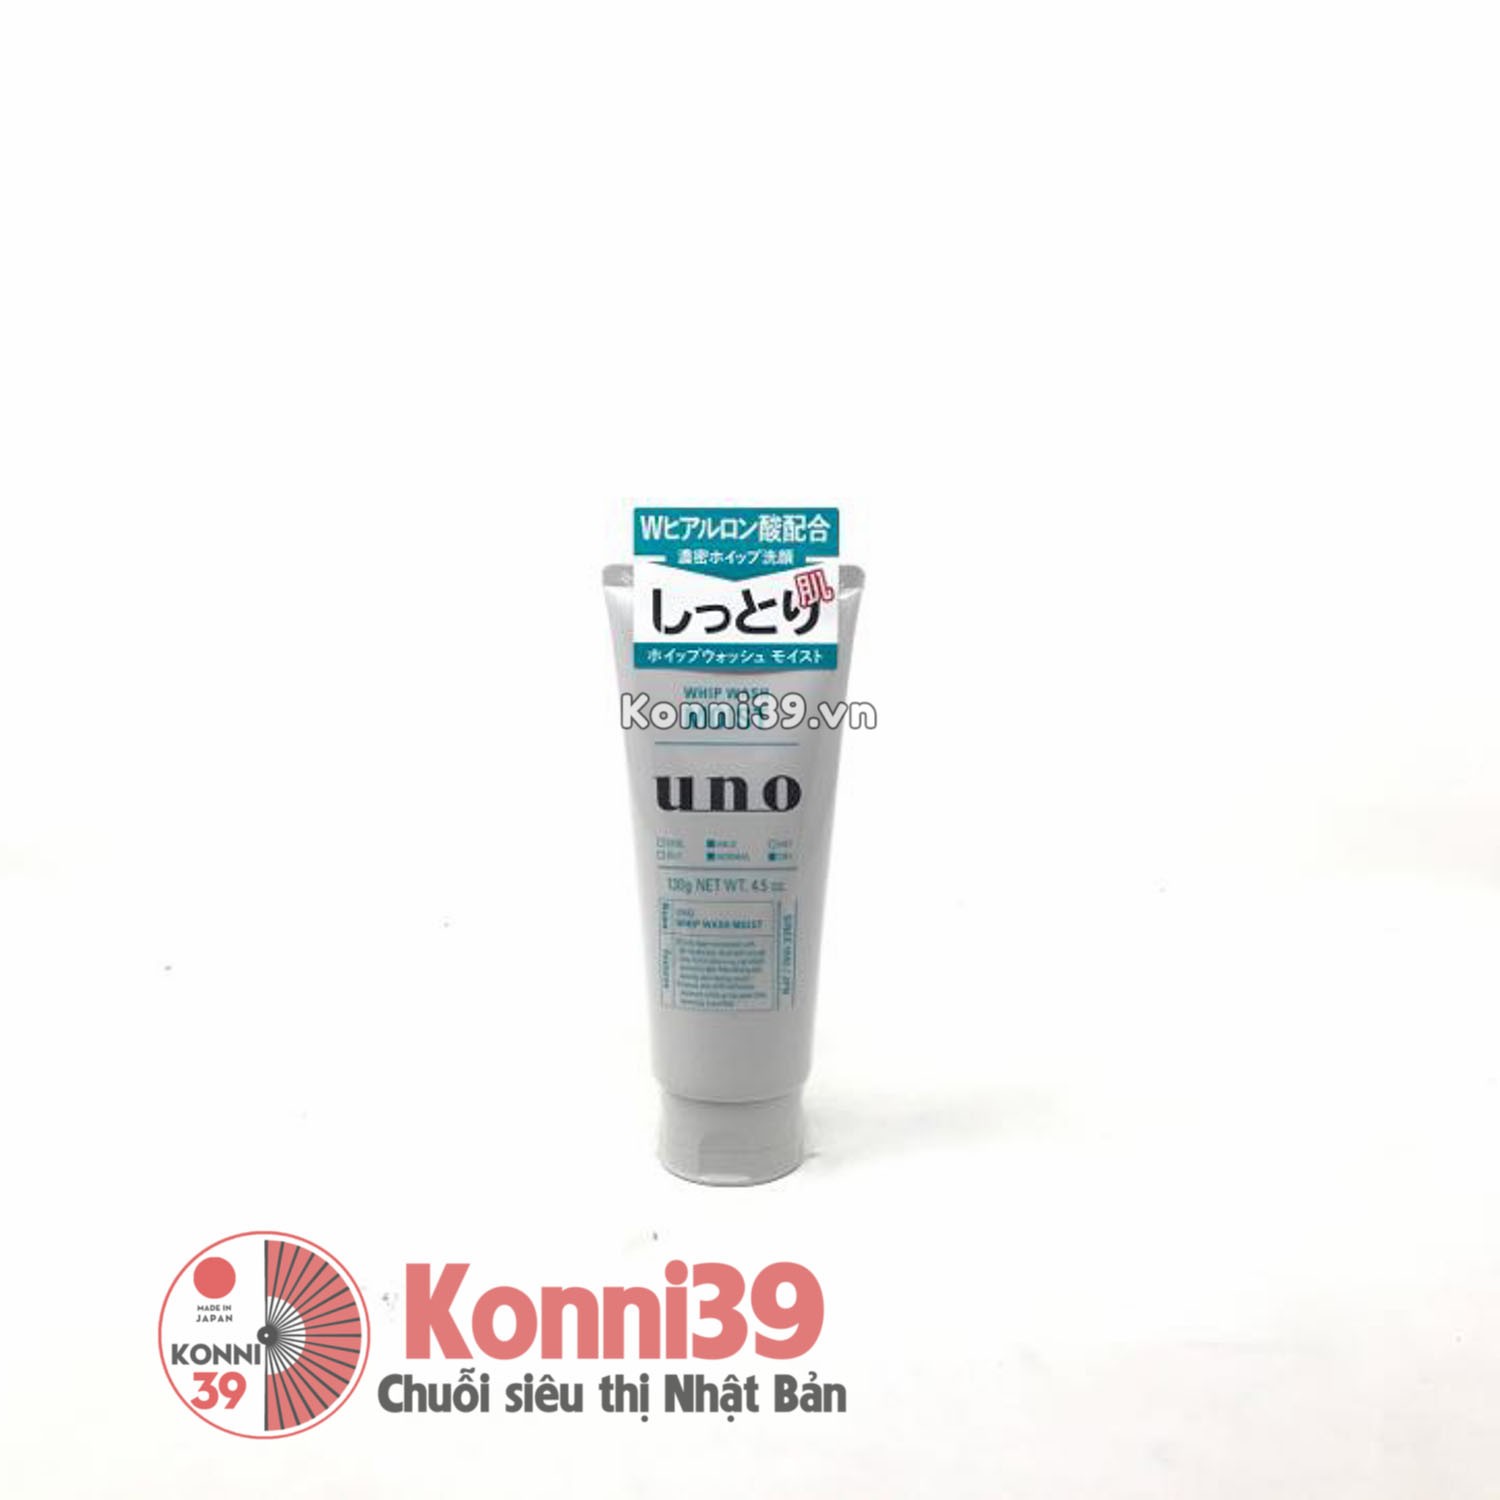 Sữa rửa mặt Shiseido Uno 130g - Black